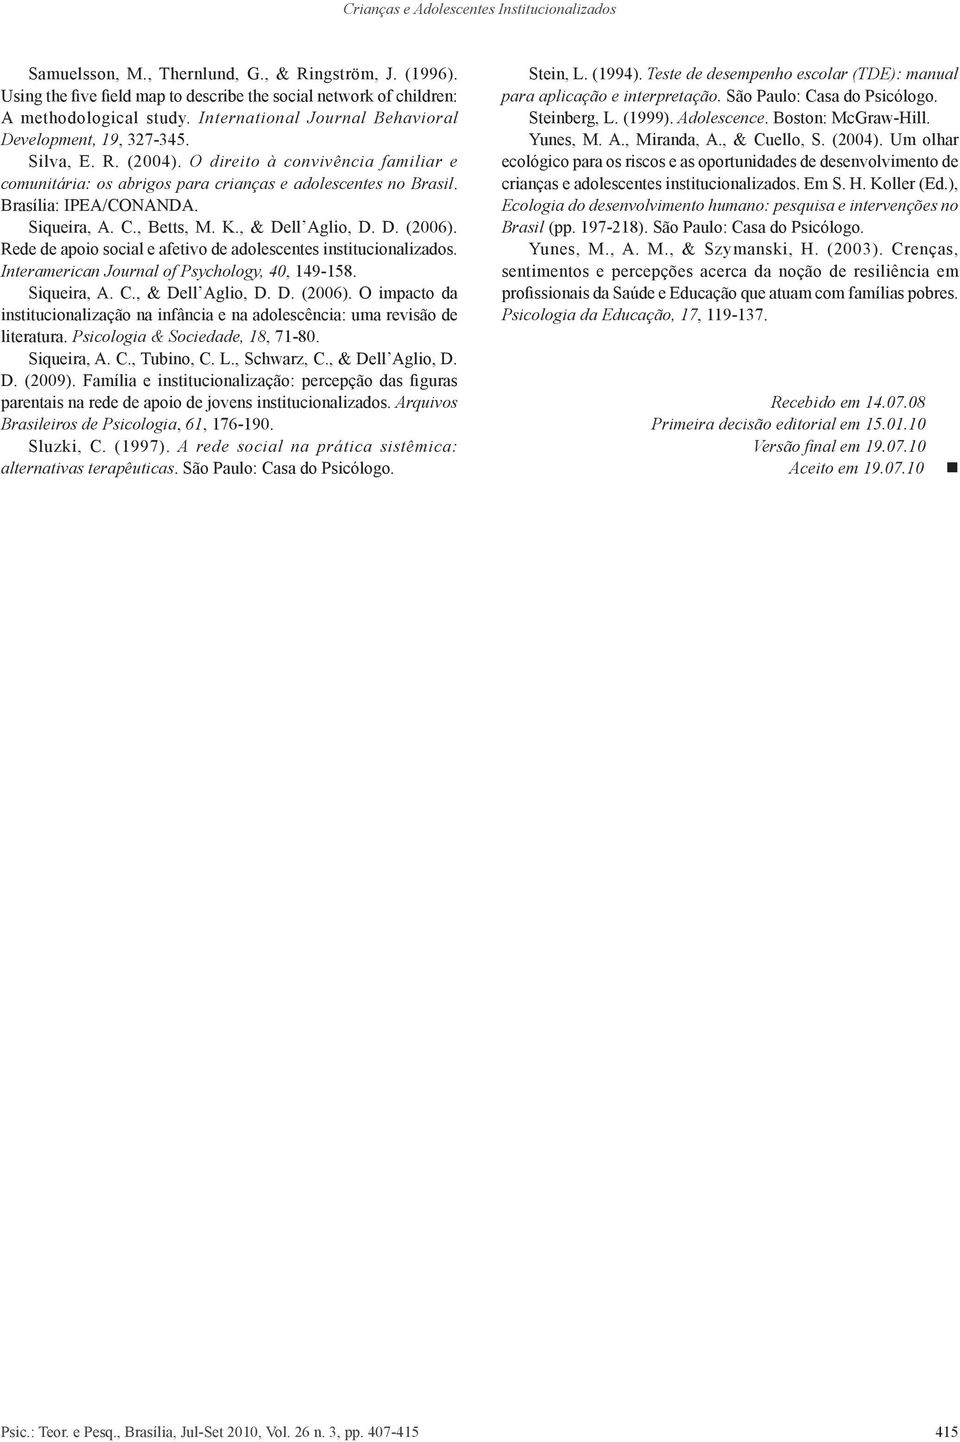 Brasília: IPEA/CONANDA. Siqueira, A. C., Betts, M. K., & Dell Aglio, D. D. (2006). Rede de apoio social e afetivo de adolescentes institucionalizados. Interamerican Journal of Psychology, 40, 149-158.